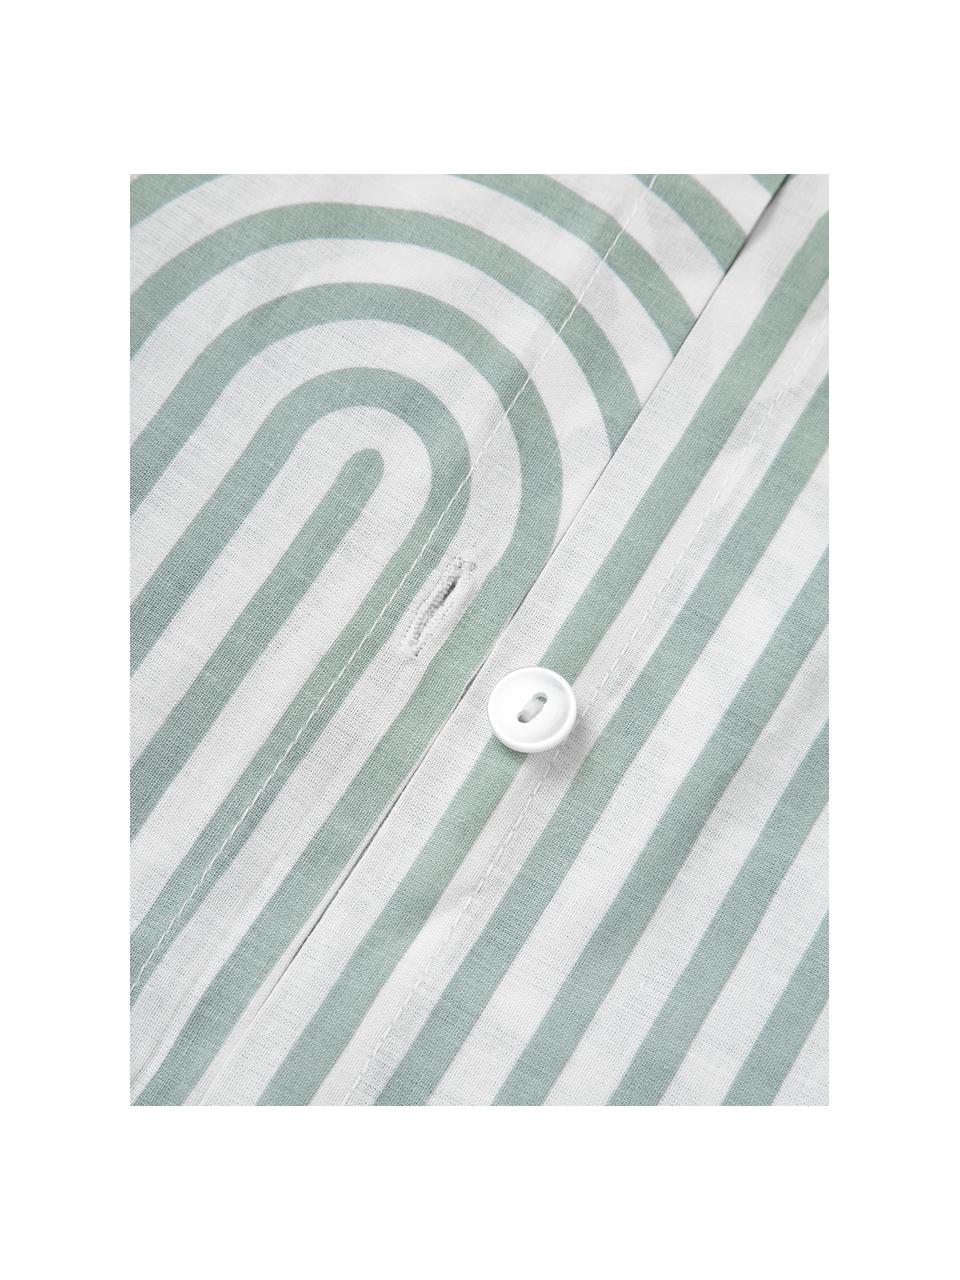 Baumwoll-Kopfkissenbezug Arcs, Webart: Renforcé Fadendichte 144 , Salbeigrün, Weiß, B 40 x L 80 cm